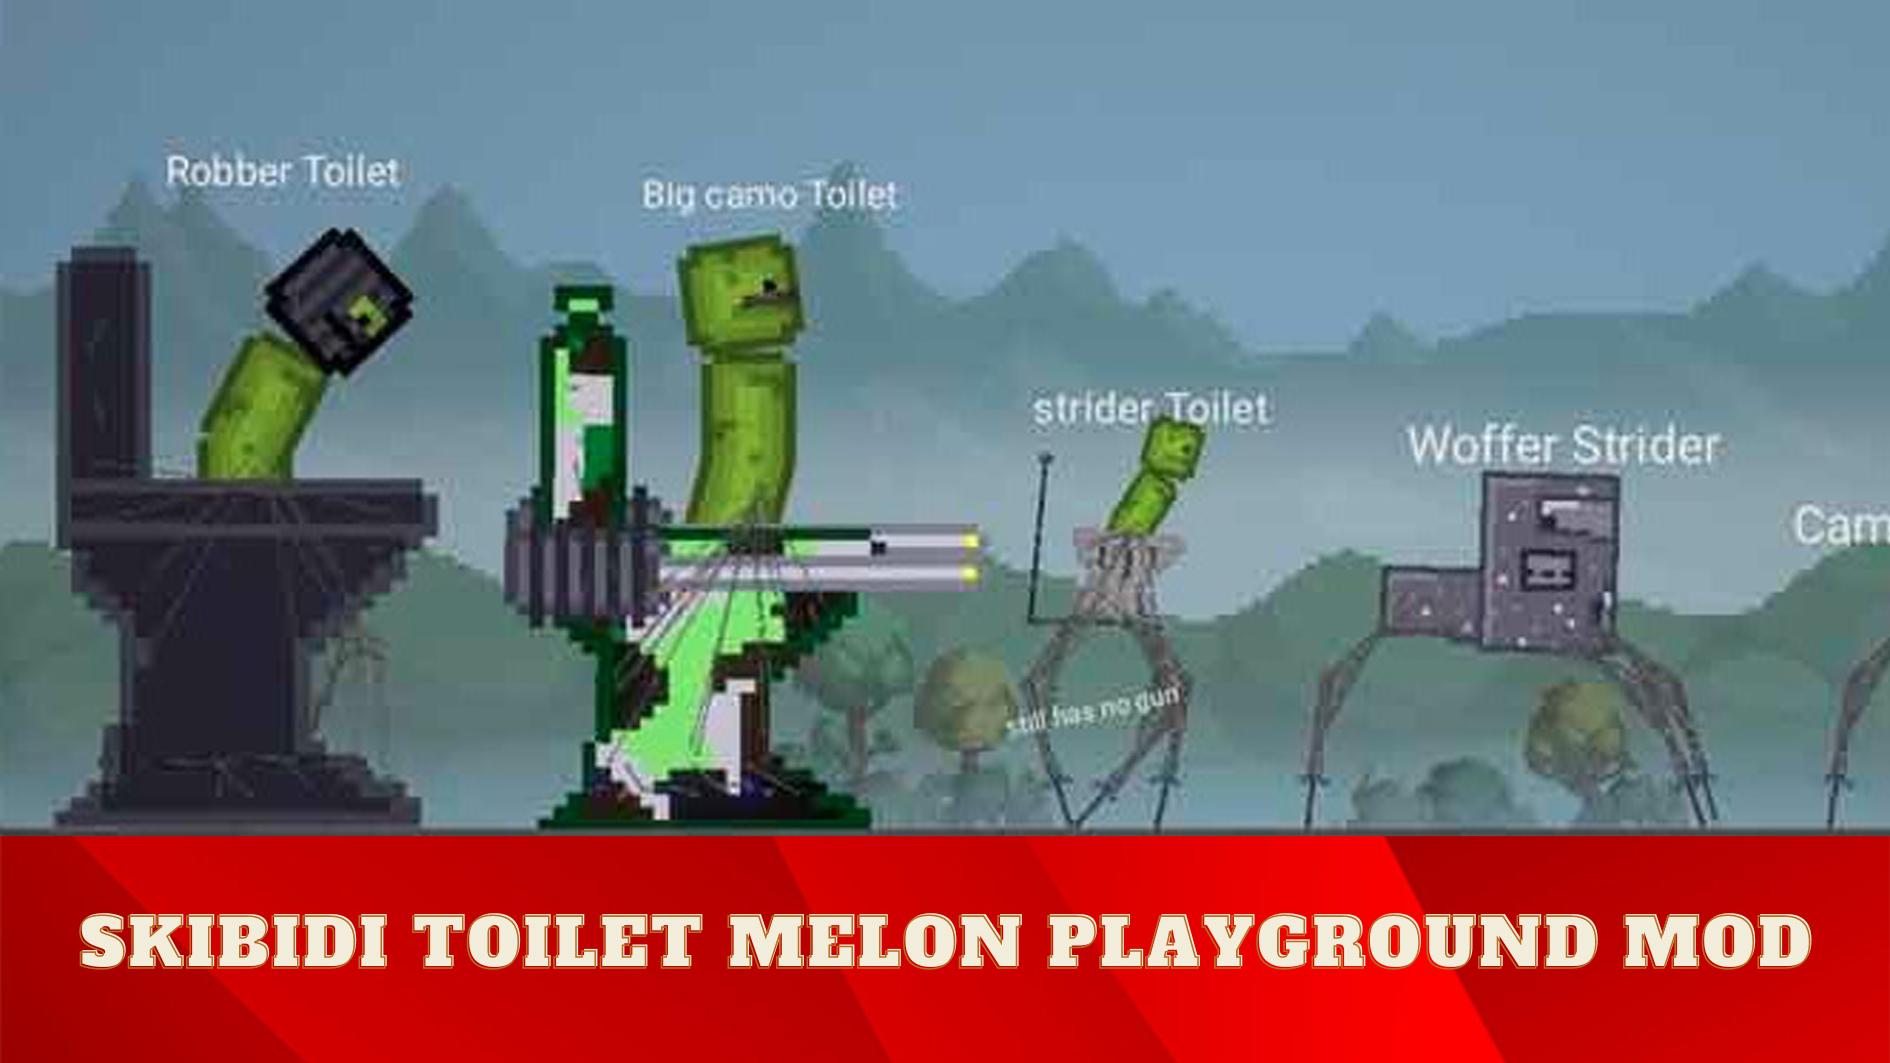 Melon Playground Telegram SKIBIDI Toilet. Скибиди туалет в Мелон плейграунд. Astro Toilet Melon Mod. Scientist skibidi toilet melon playground